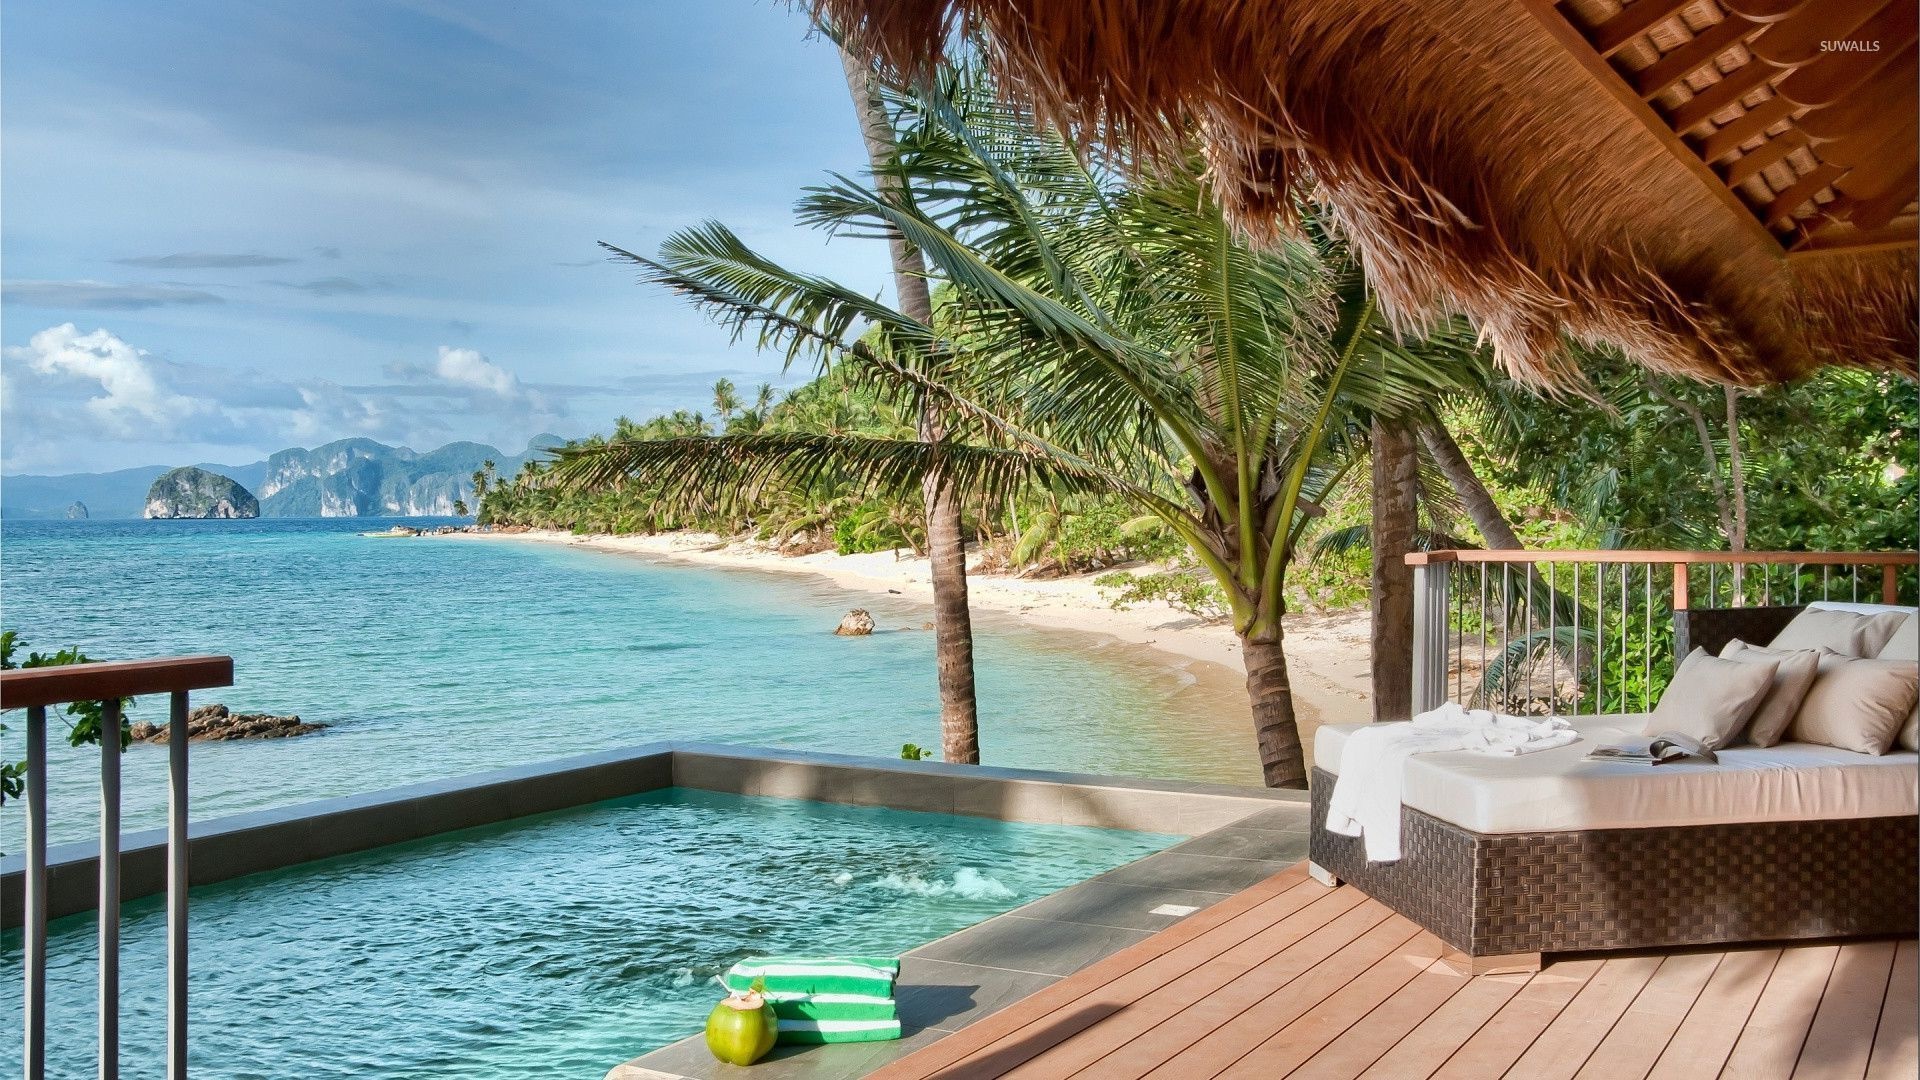 Island resort, Beach paradise, Stunning wallpapers, Beautiful beaches, 1920x1080 Full HD Desktop